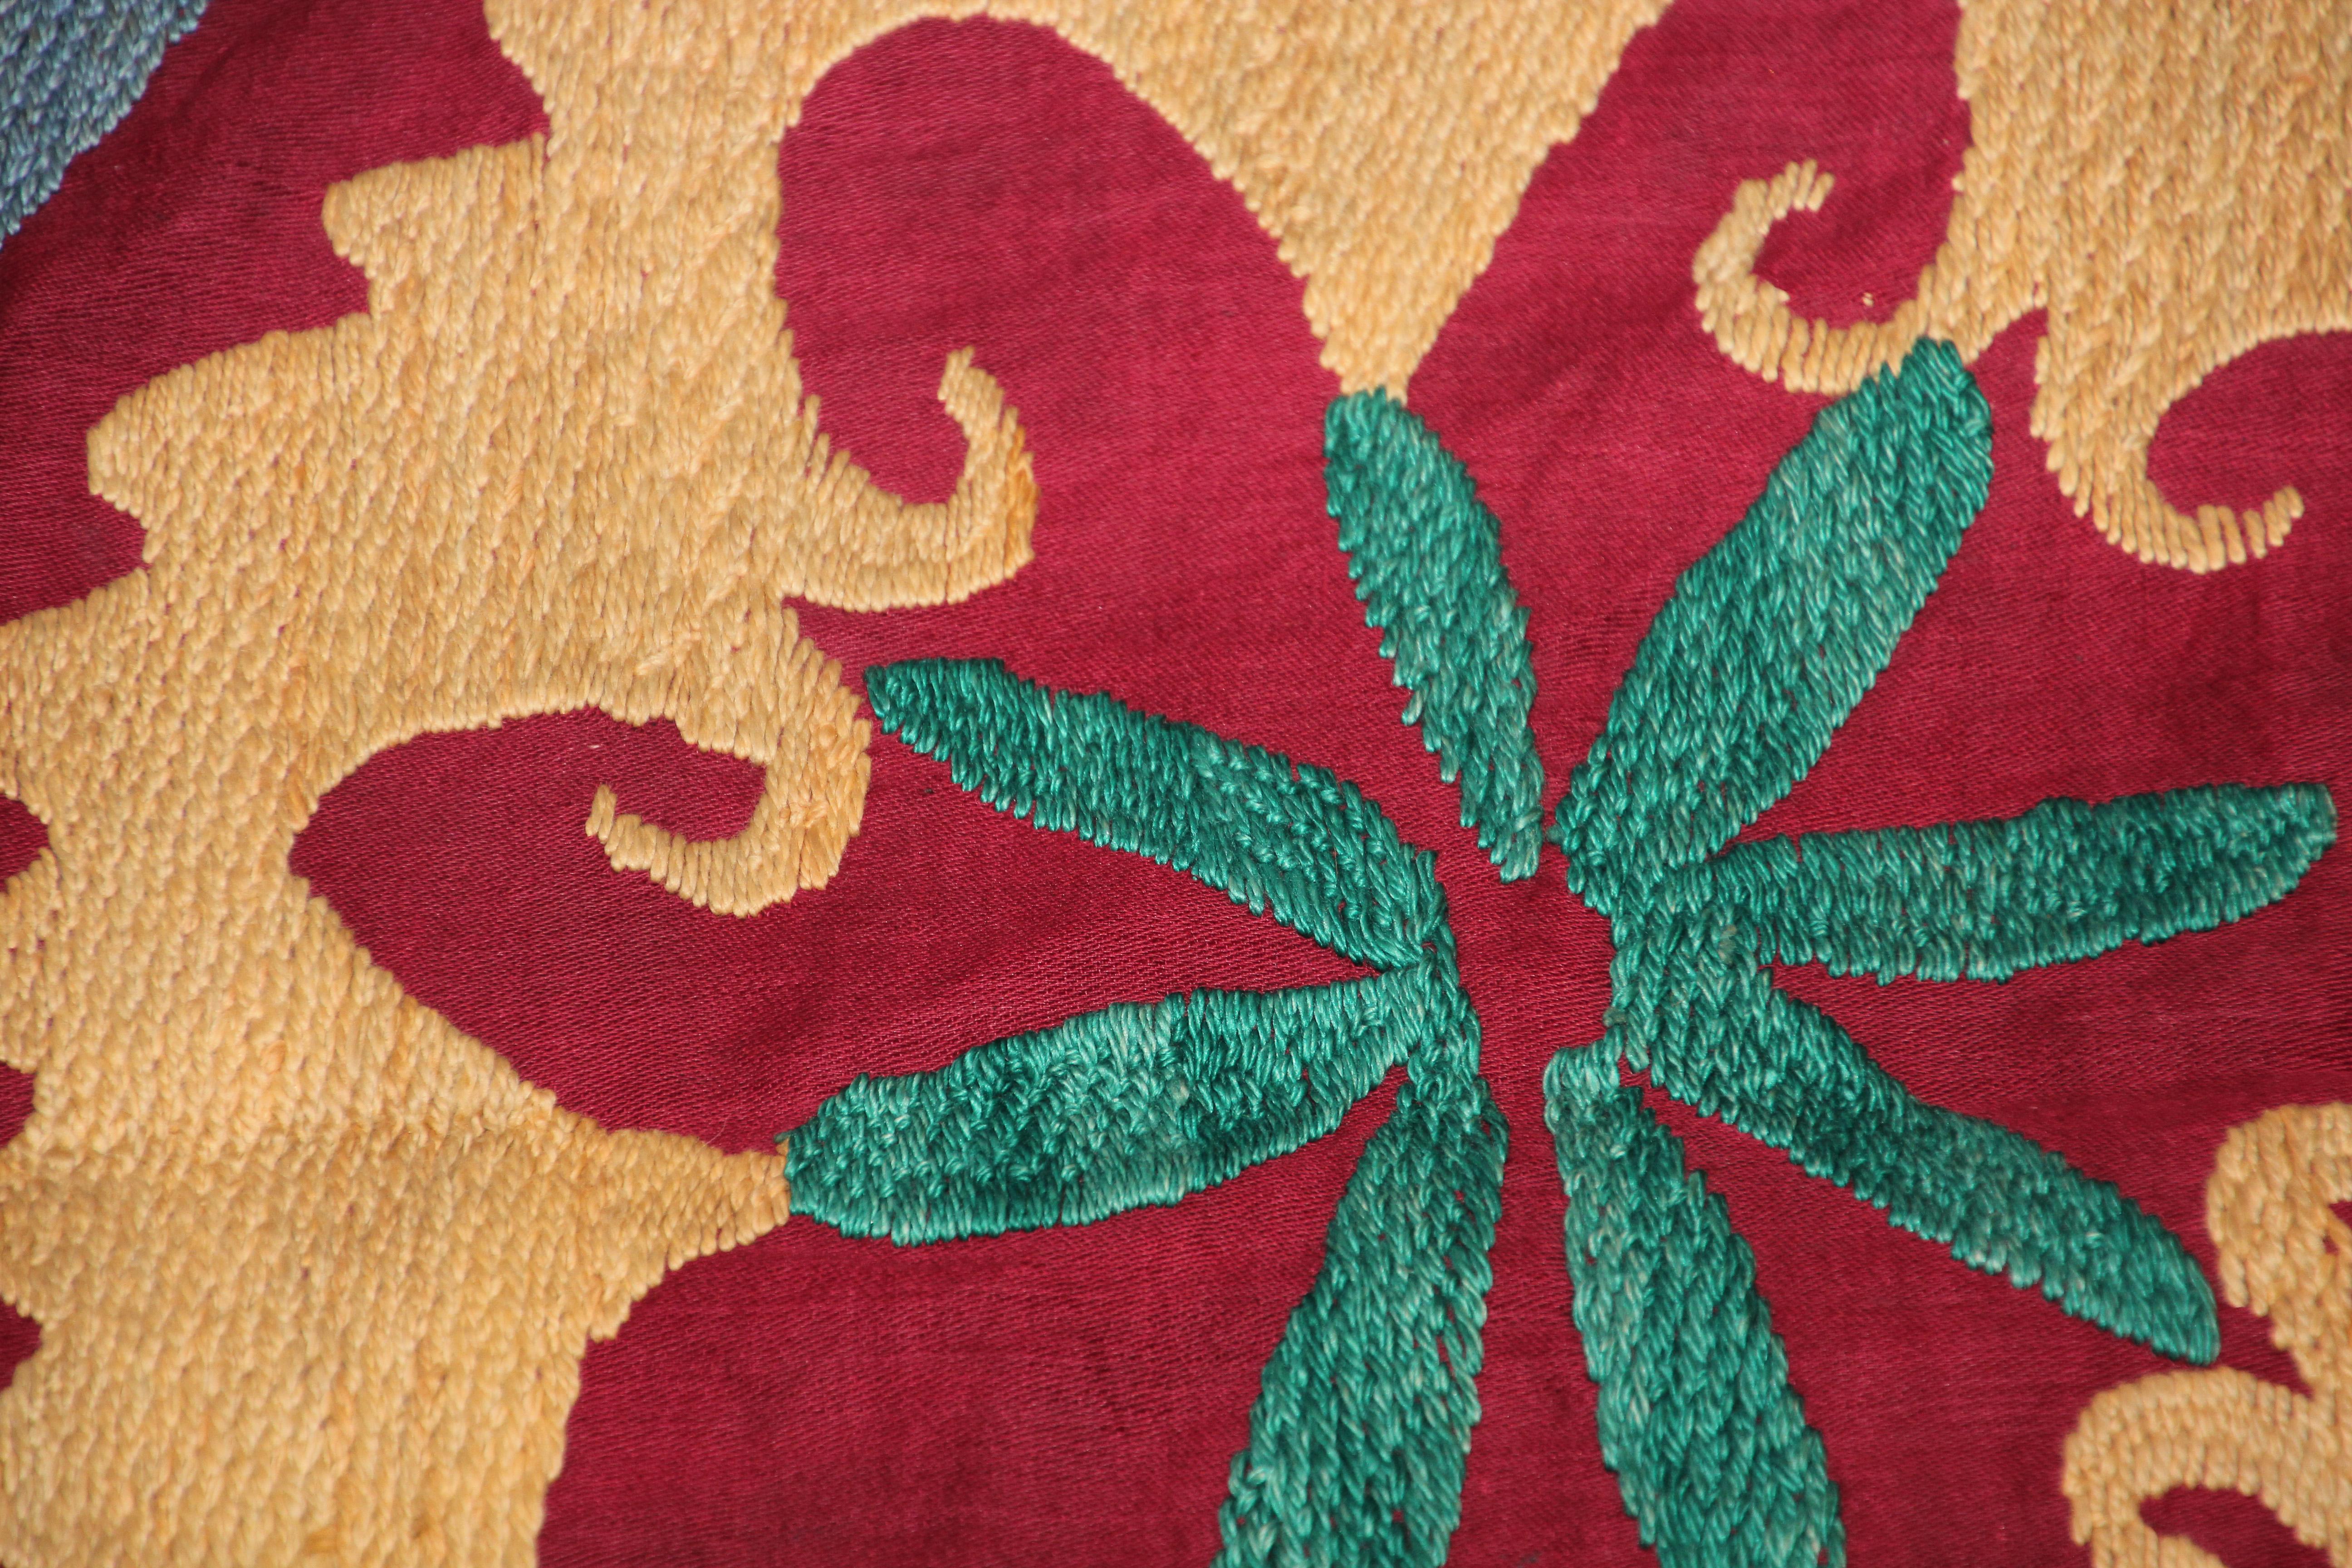 Vintage Uzbek Suzani Needlework Textile Blanket or Tapestry 13